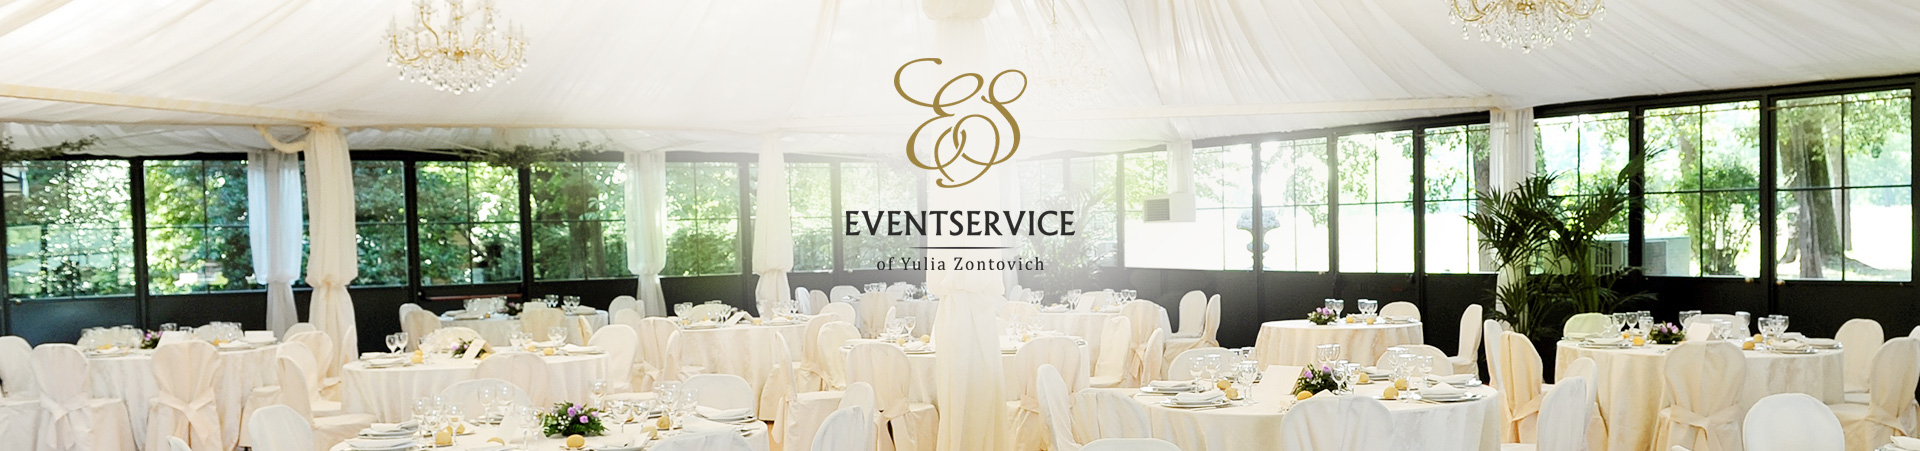 Фирменный стиль Eventservice of Yulia Zontovich